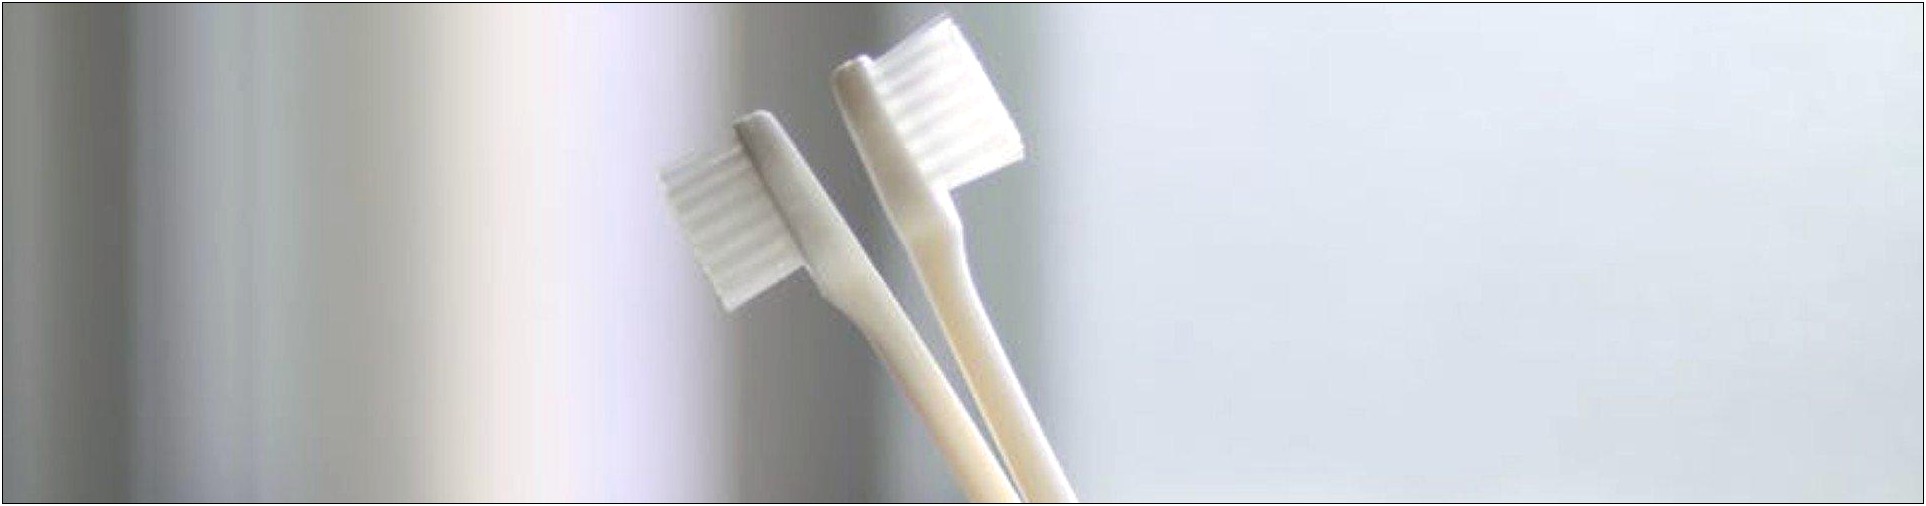 Dental Hygiene Resume Free Template